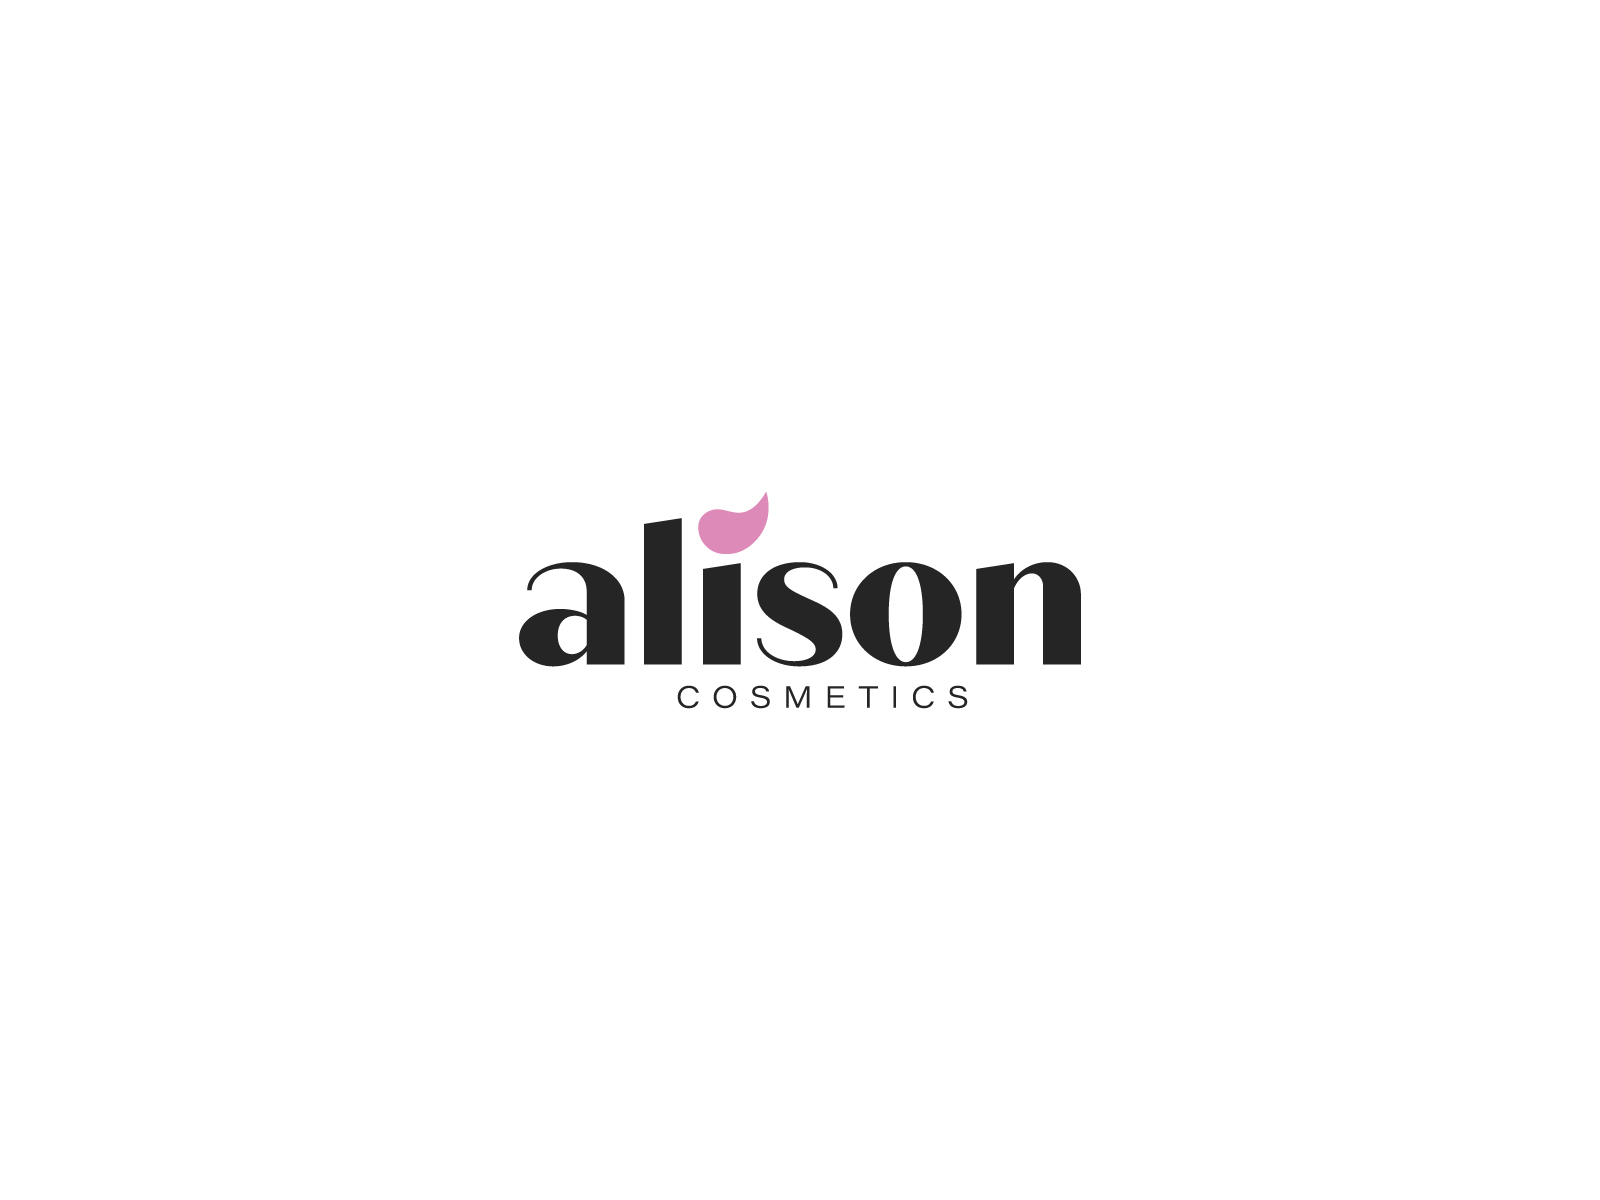 Alison Cosmetics by Natali Vitória on Dribbble